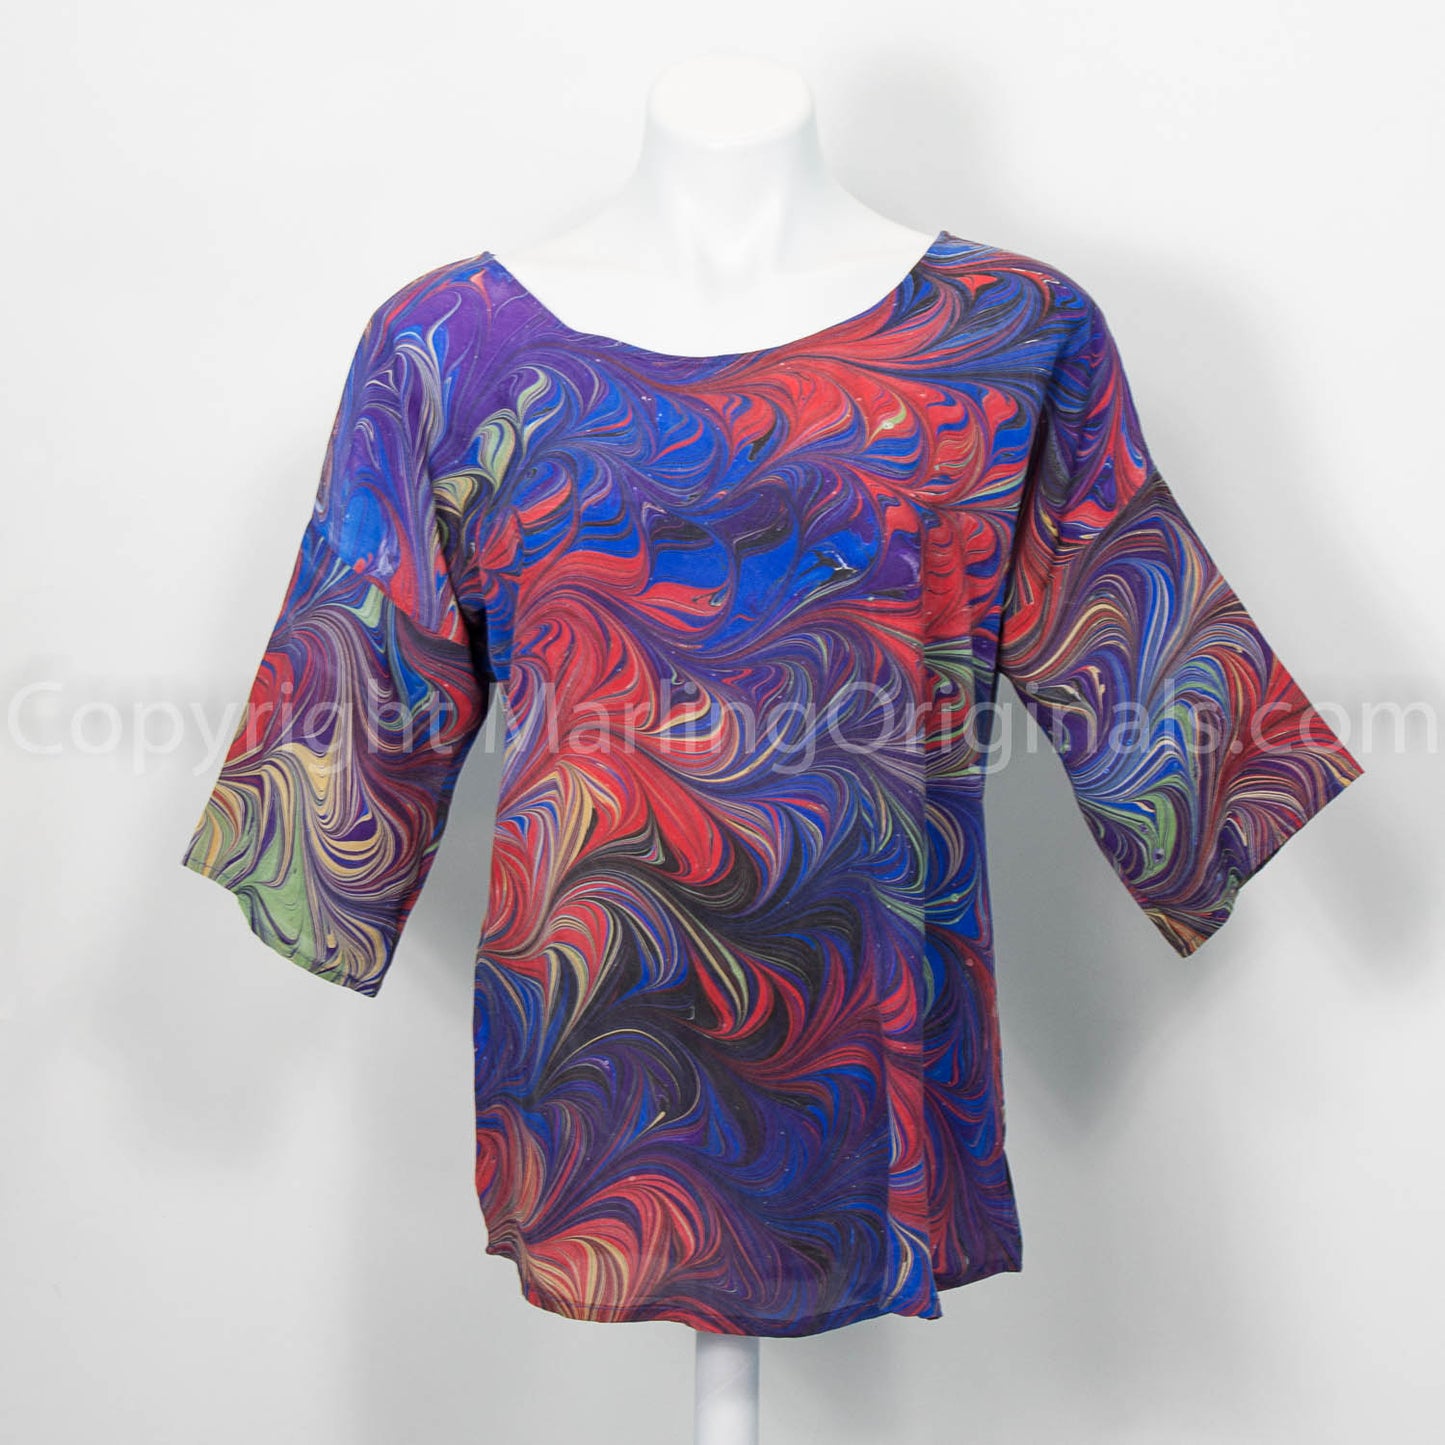 Silk top marbled in red, purple, blue, black tones.  Round neck, curved hem, half sleeve.